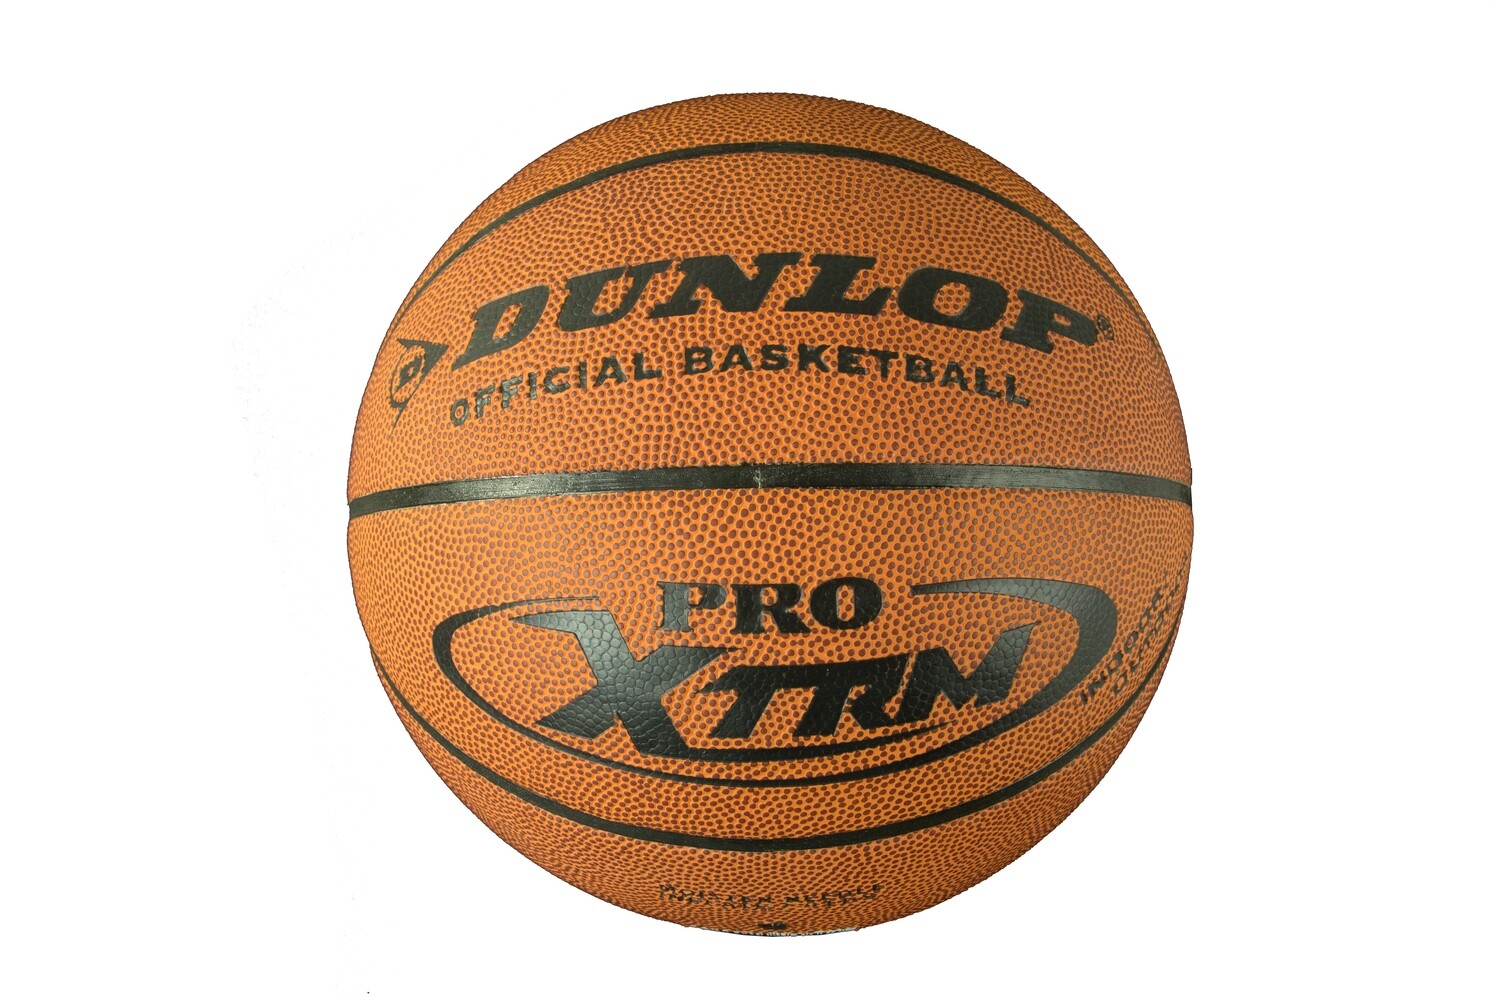 Dunlop Basketball Pro Xtrm (Senior)